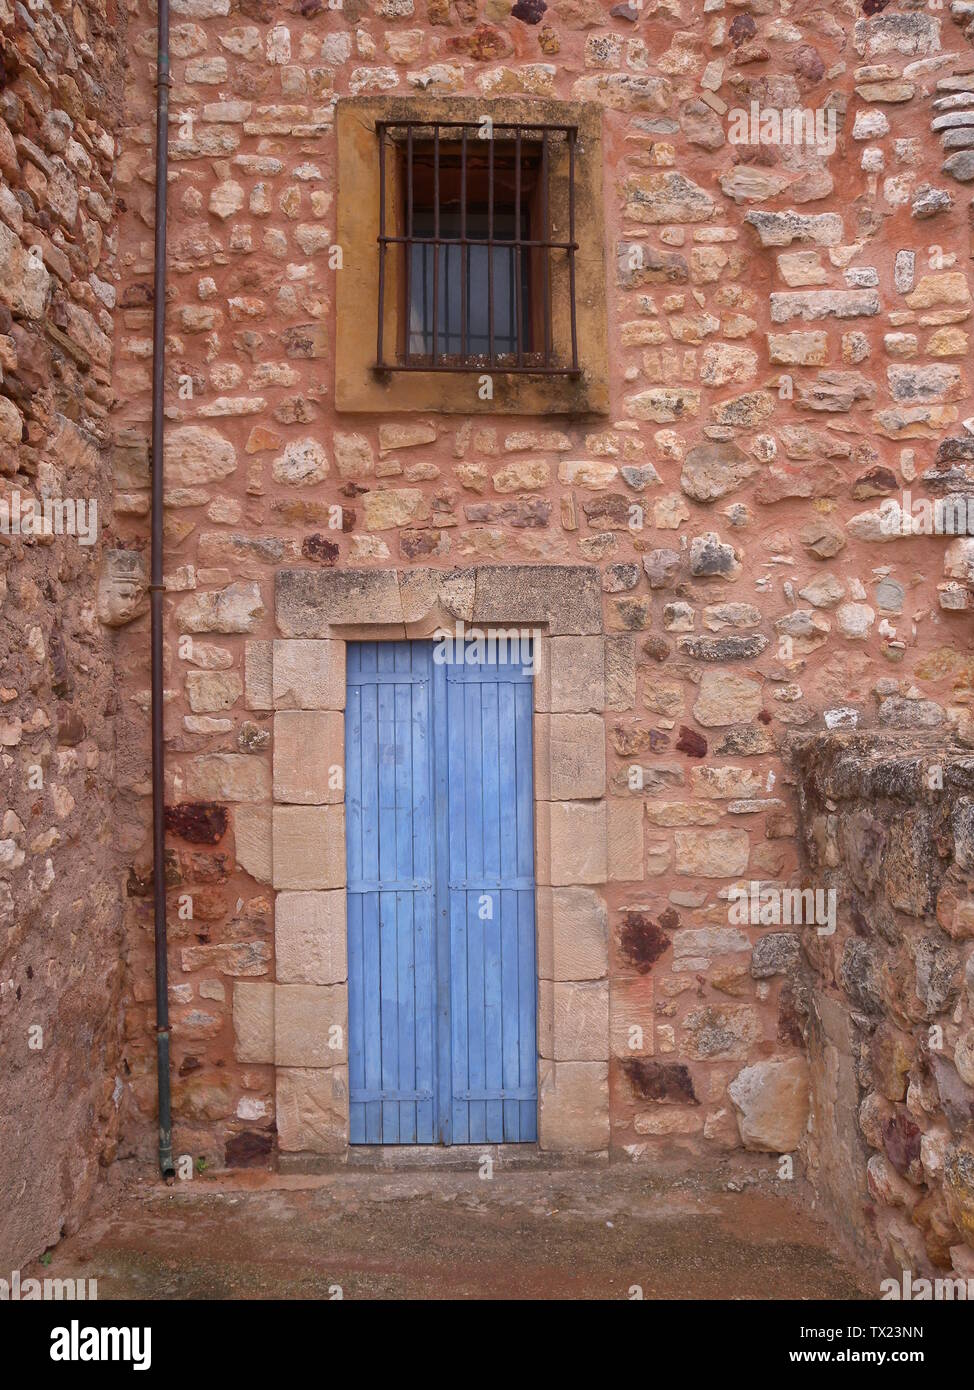 Dorf Roussillon rustikale Tür Holz ocker Luberon Provence Frankreich Stockfoto